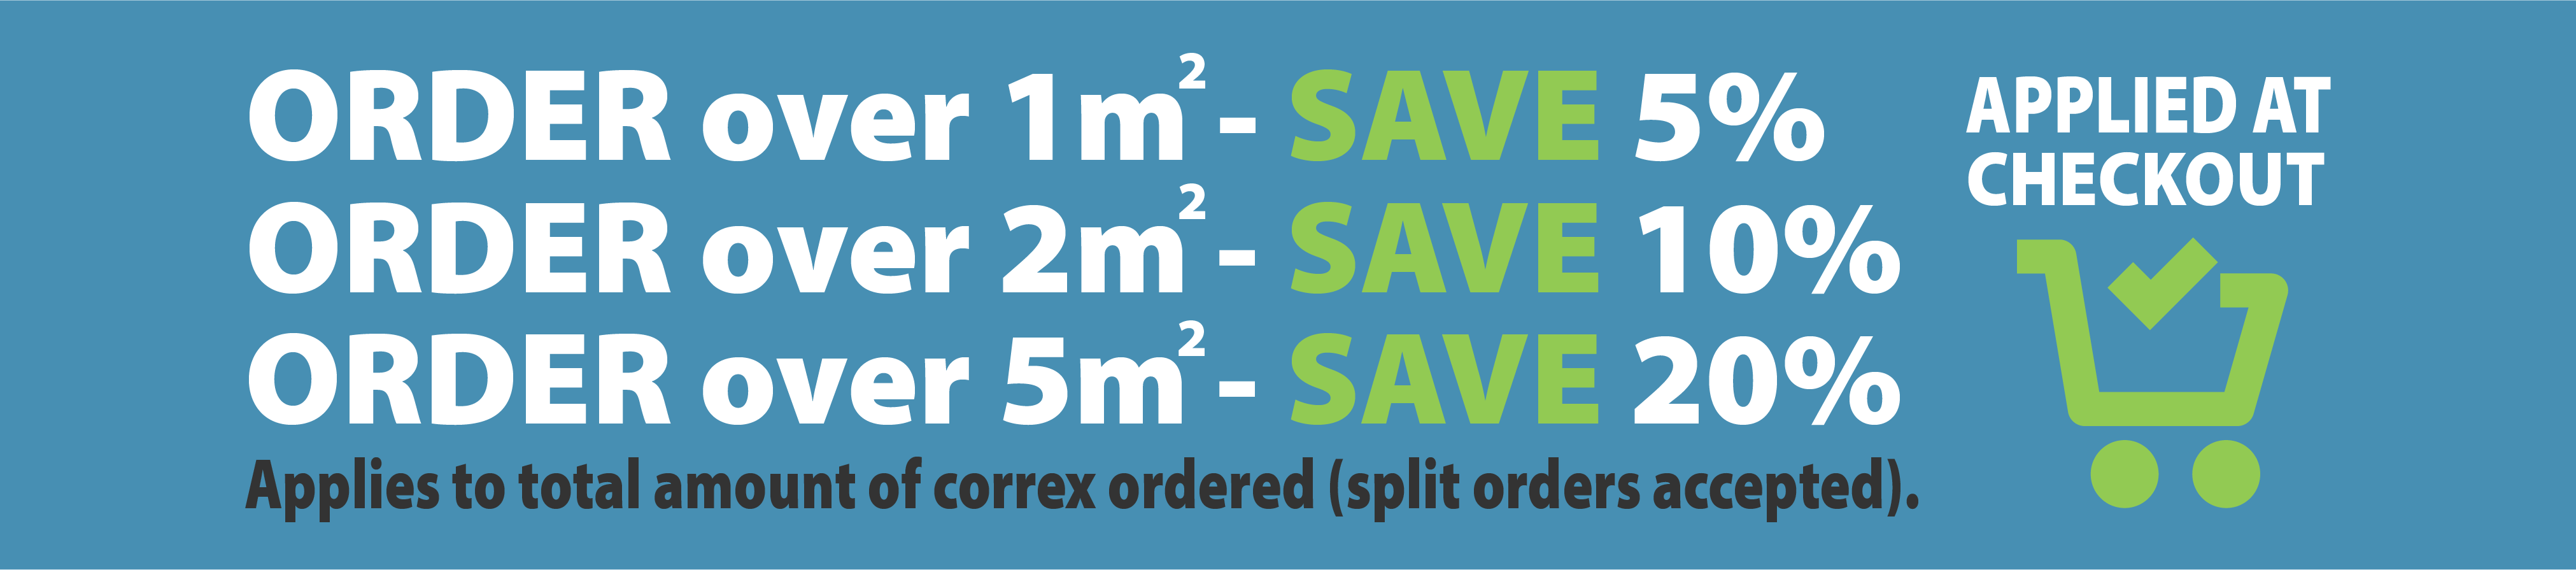 SAVE 10% on Correx printing